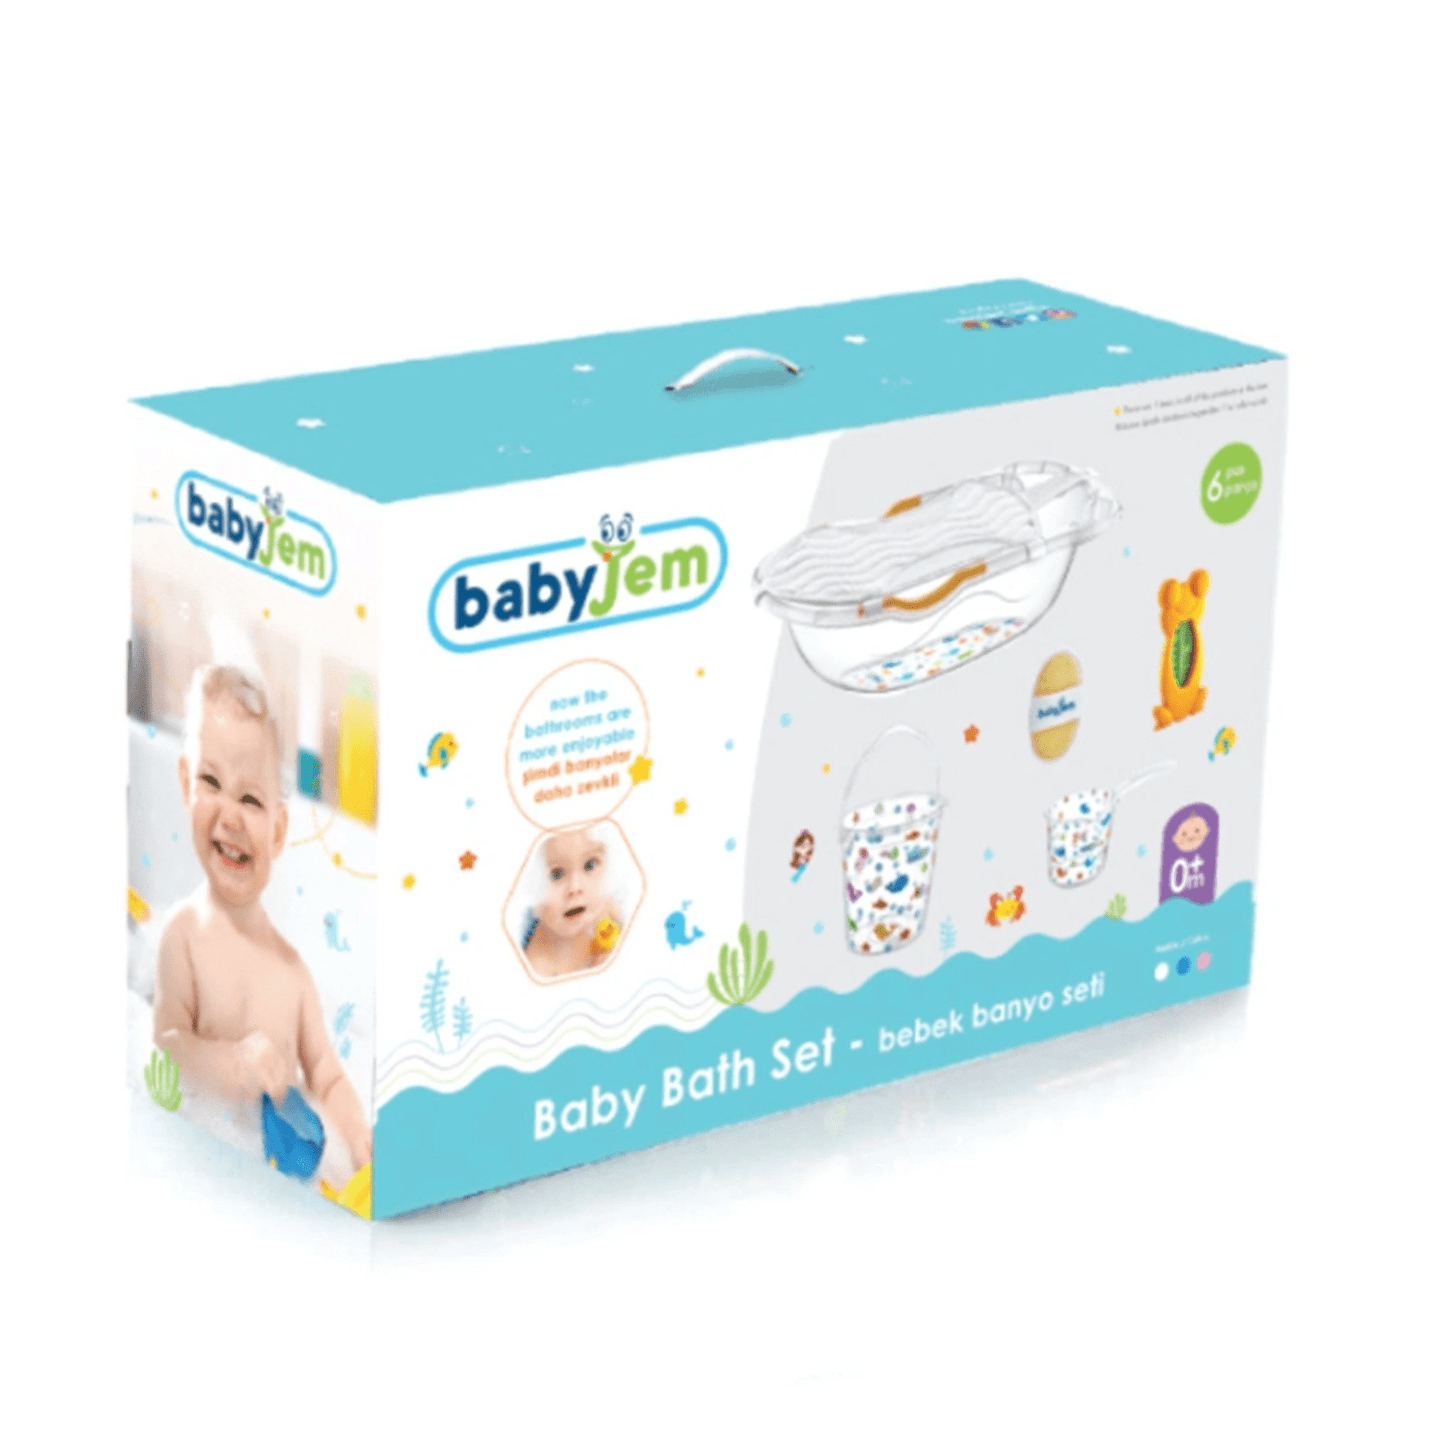 Babyjem - Baby Bath Tub Set 6 Pcs with Thermometer